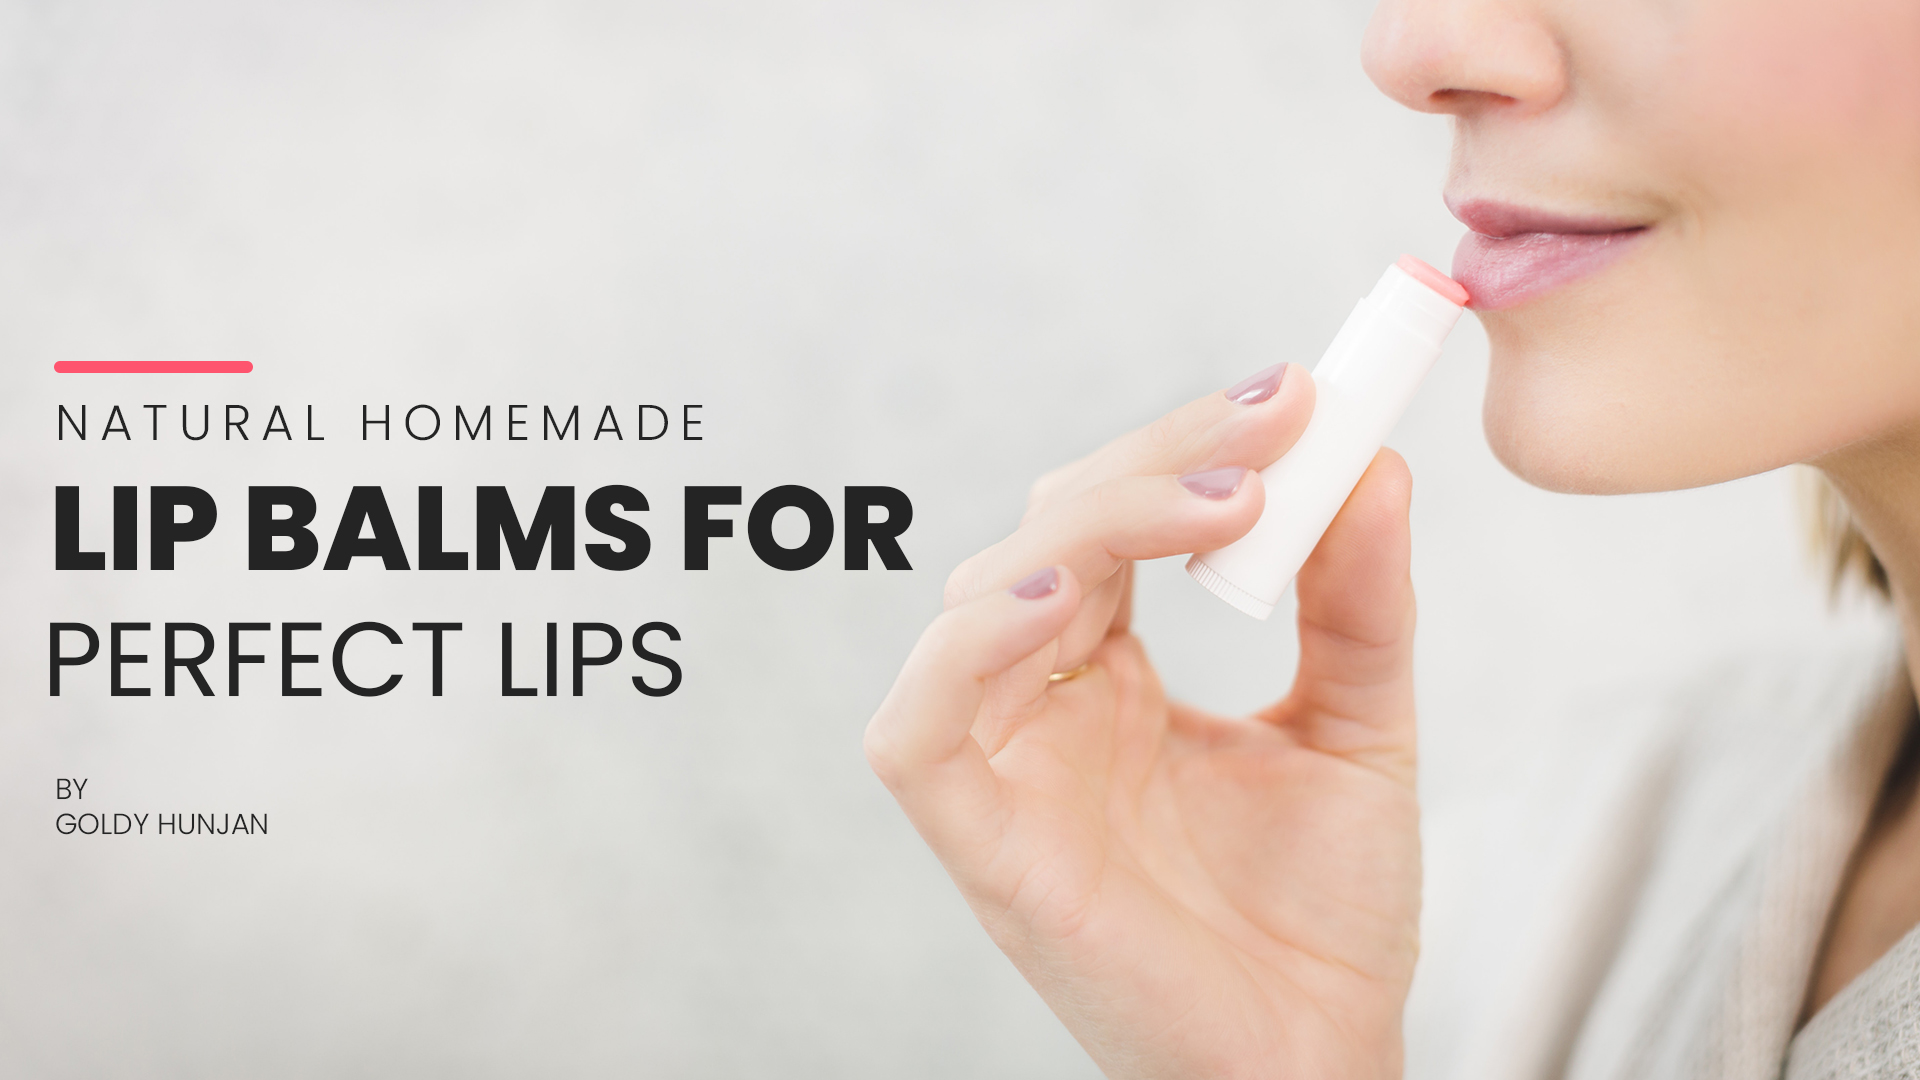 Homemade lips balms for perfect lips